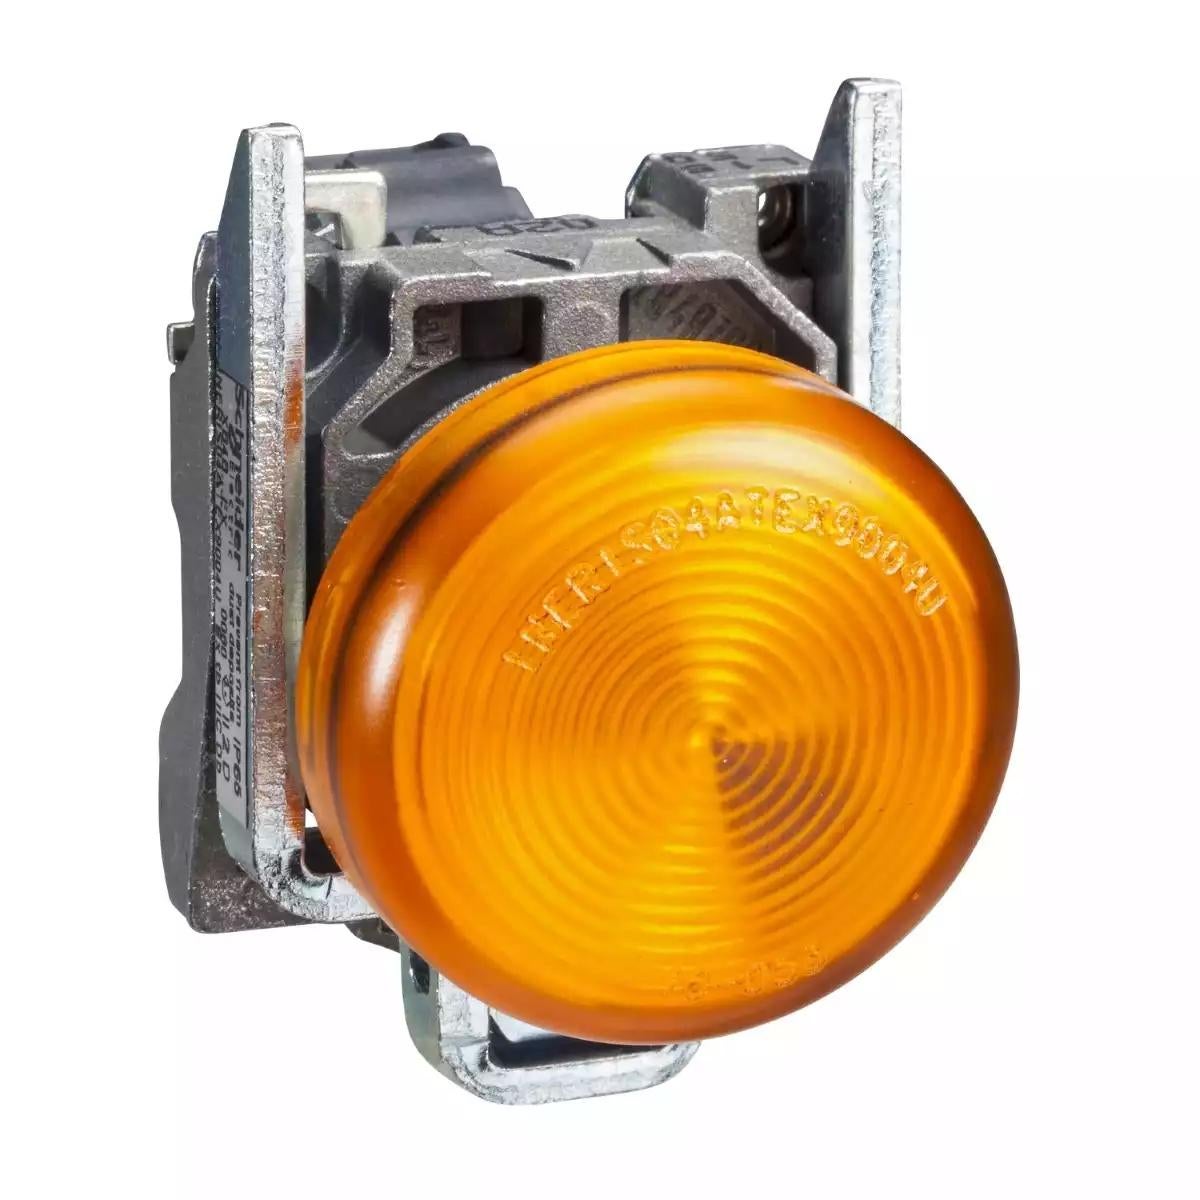 Complete pilot light, Harmony XB4 - ATEX D, 22mm, IP65, orange, integral LED, 230...240V, lugs